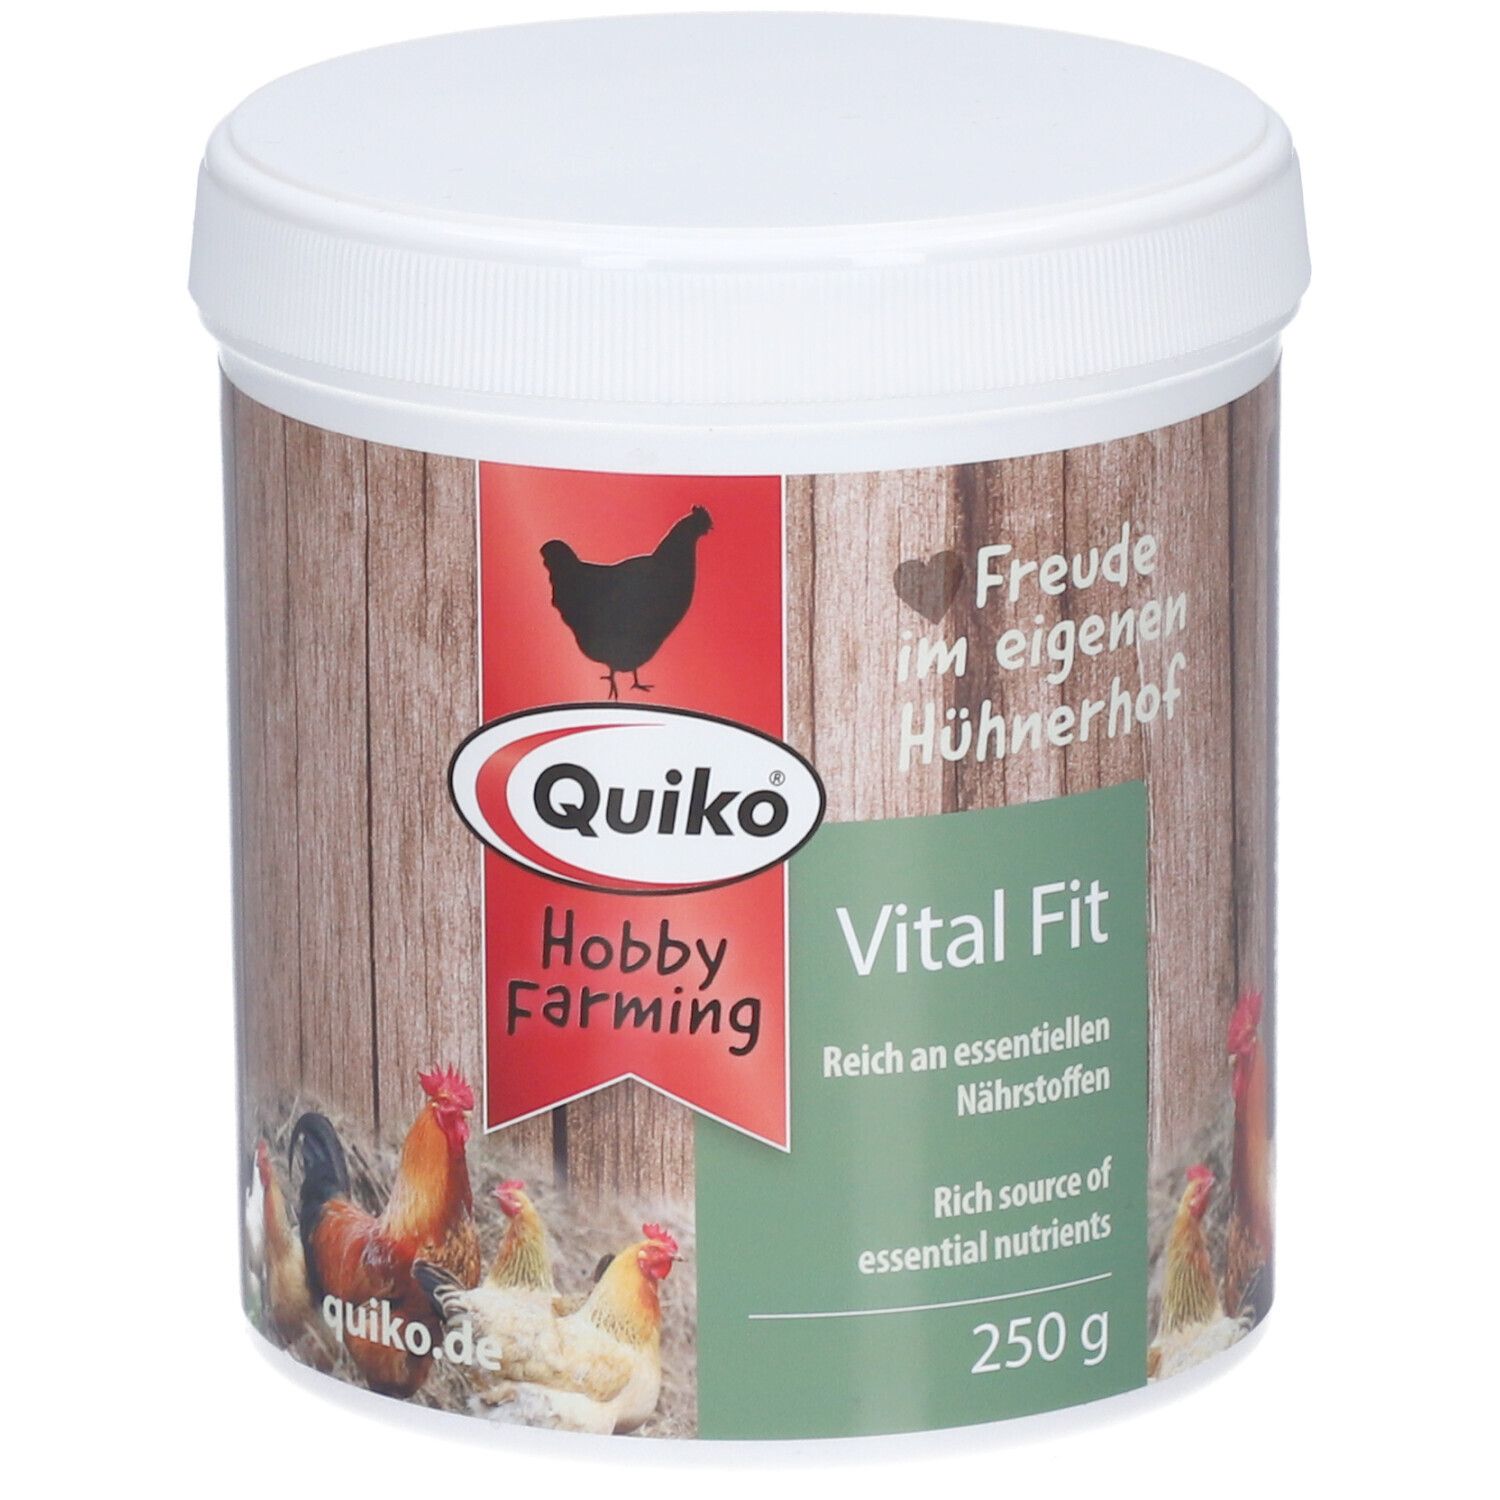 Quiko® Hobby Farming: Vital Fit